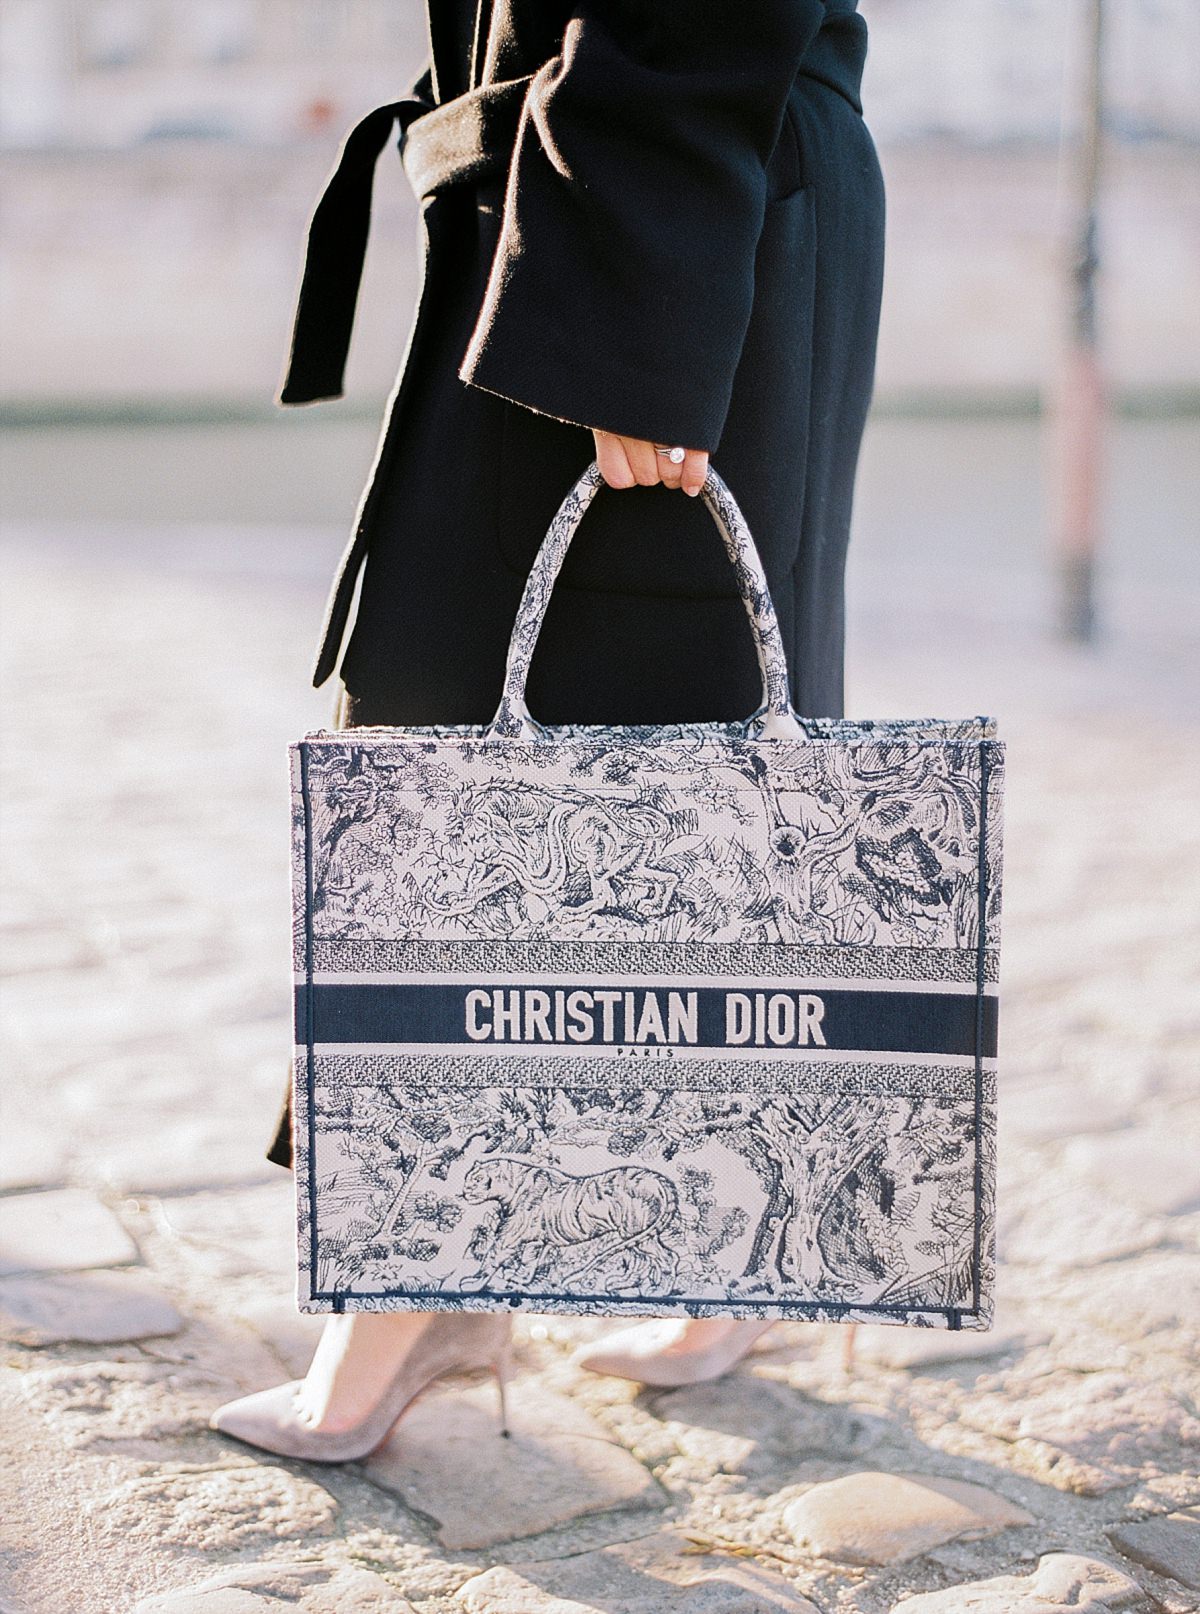 Christina Dior bag for a fashion shoot in Paris
